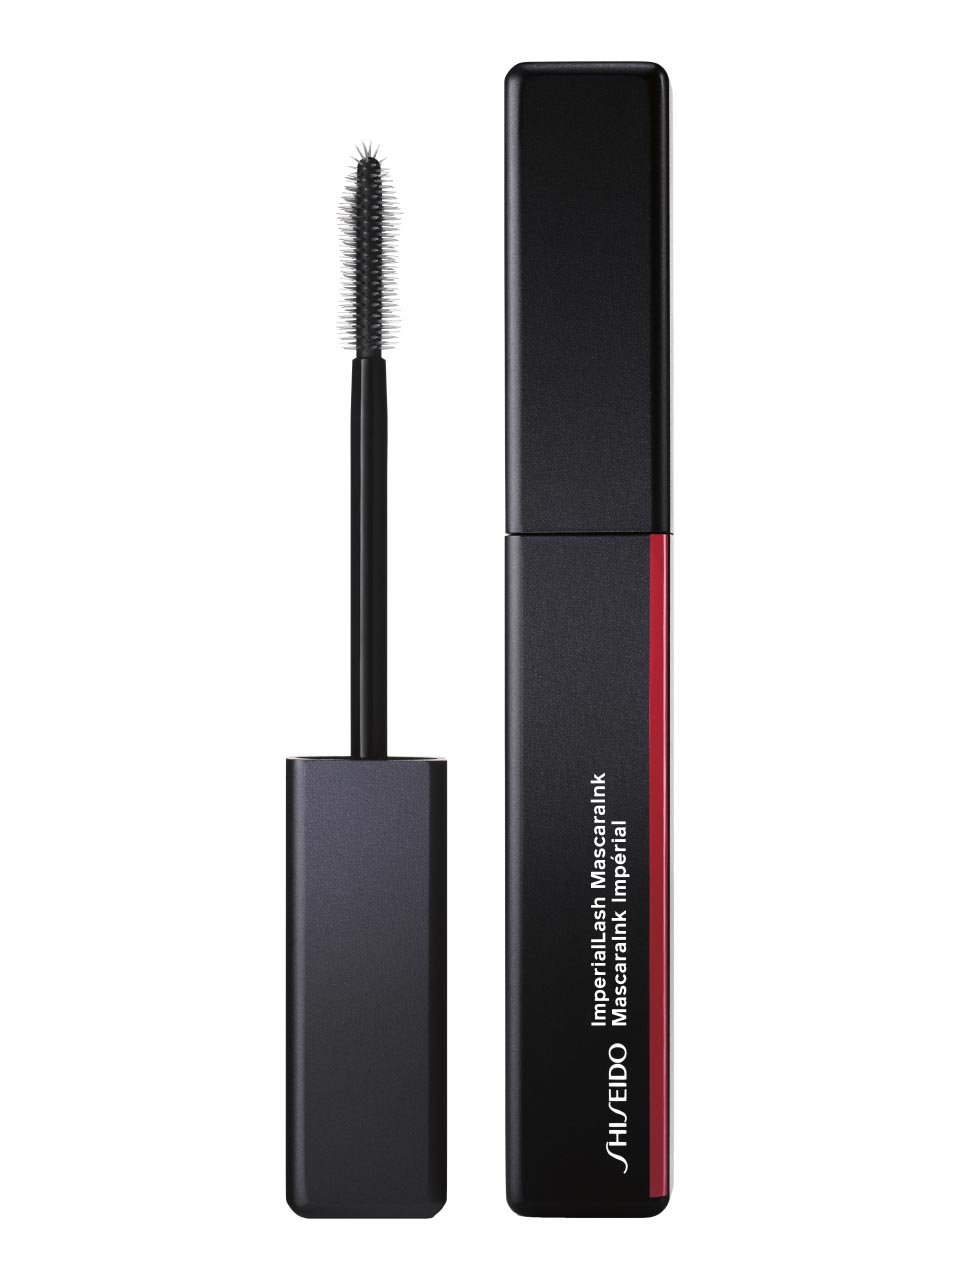 Shiseido ImperialLash Mascara Ink N° 1 Sumi Black null - onesize - 1